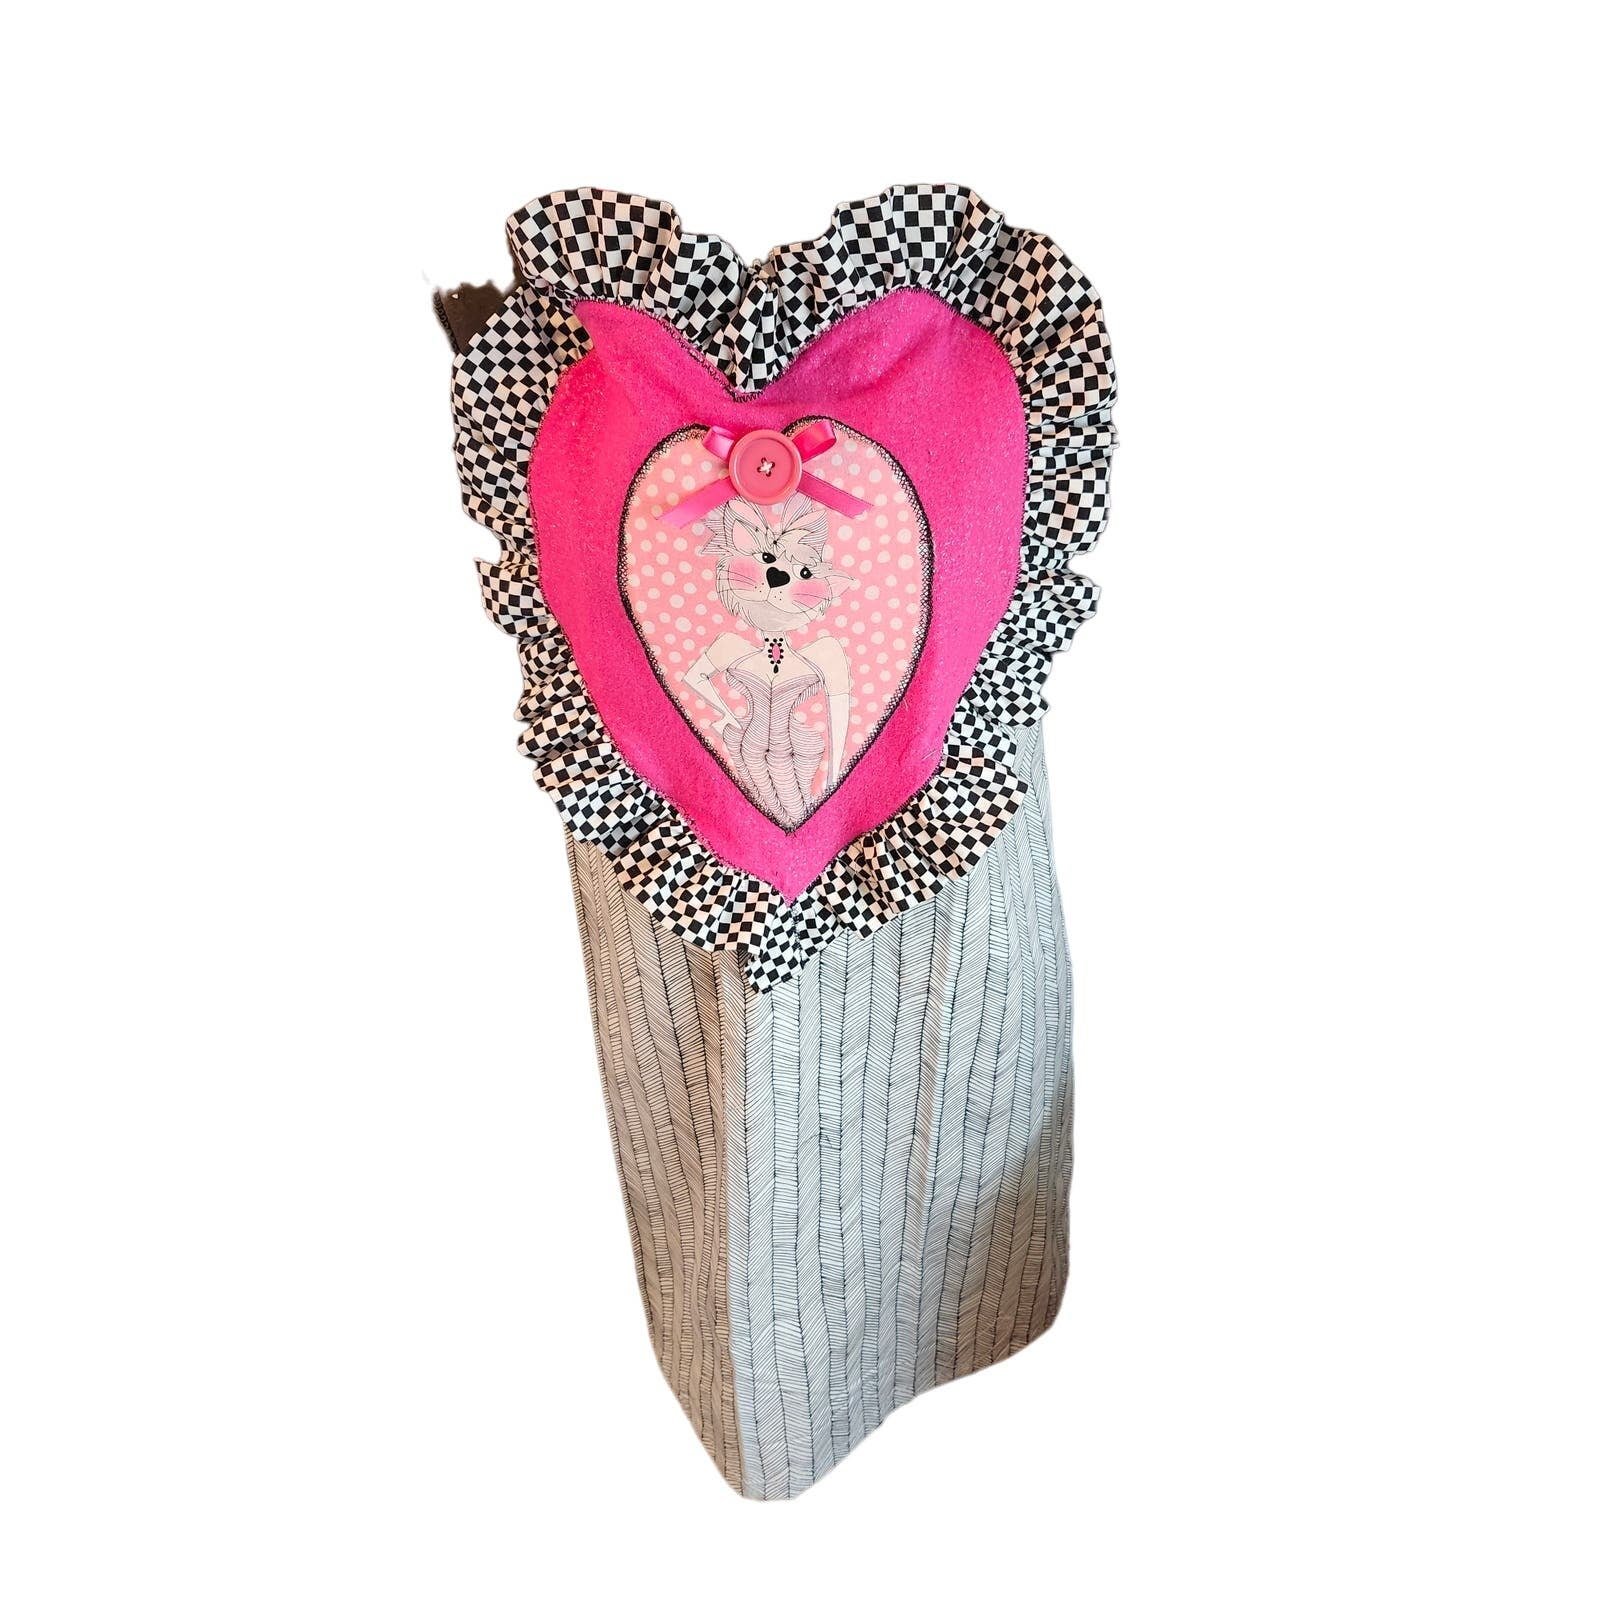 Apron potholder Whiskered  Heart Harmony Apron  pink black handmade Gbl7ZJhu5